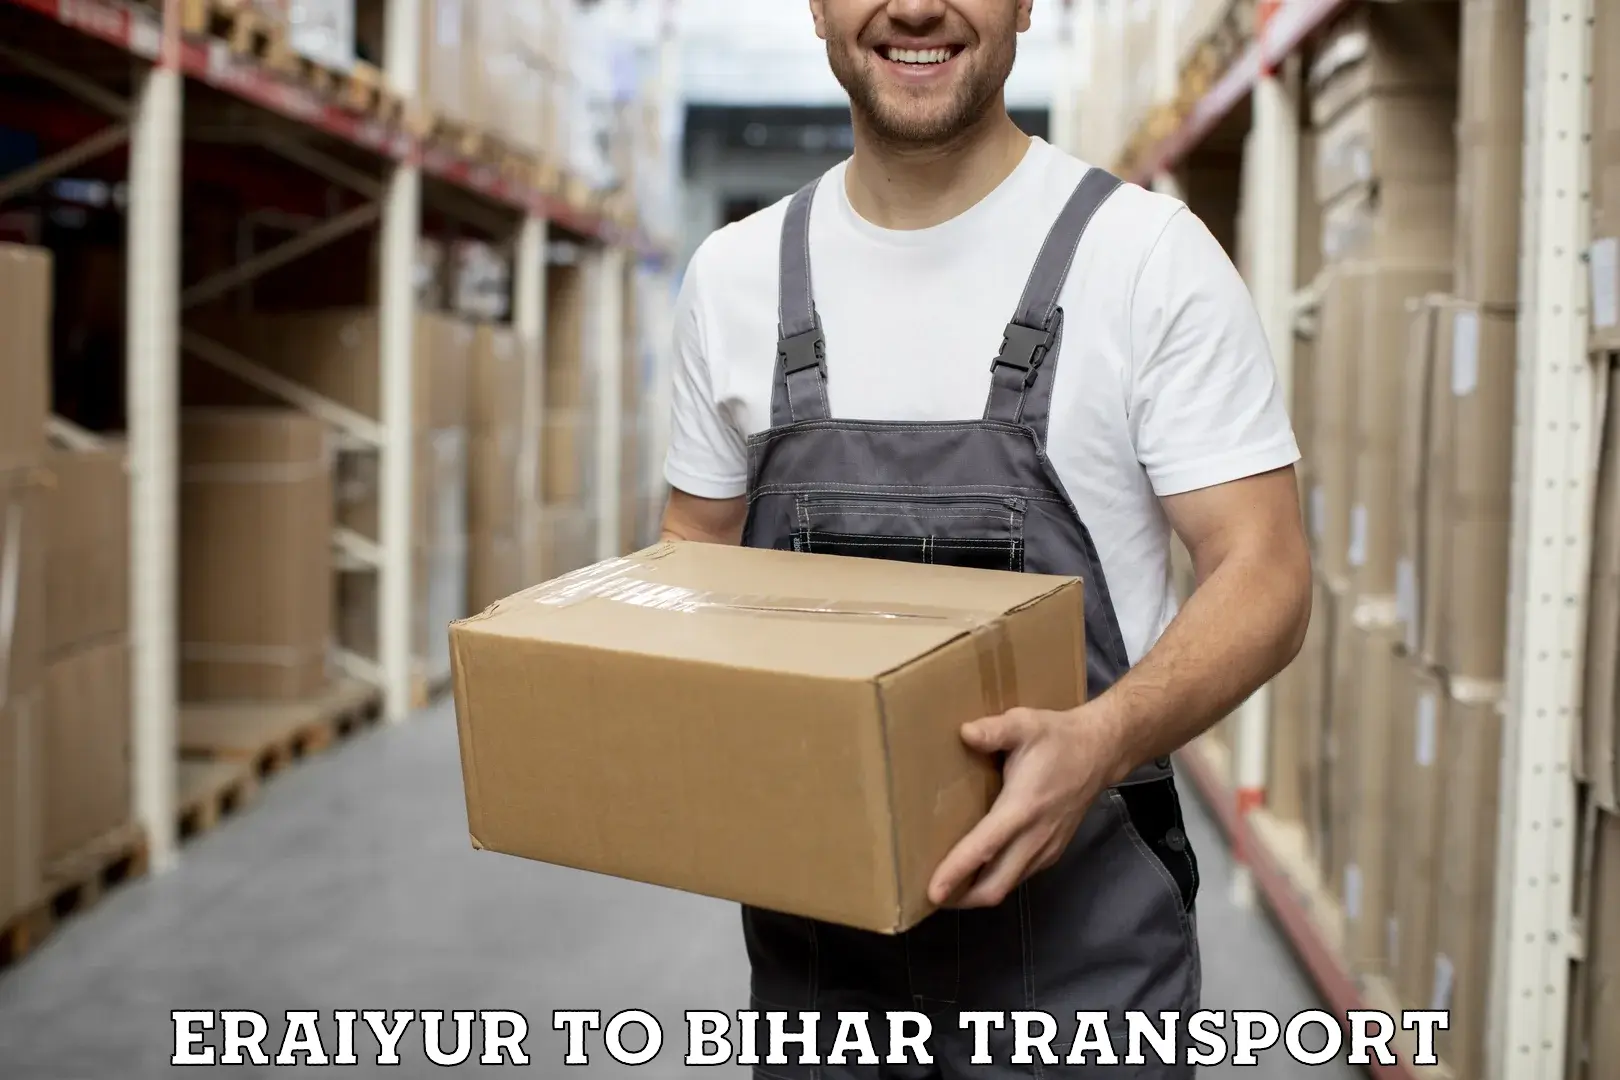 Bike transport service Eraiyur to Bihar